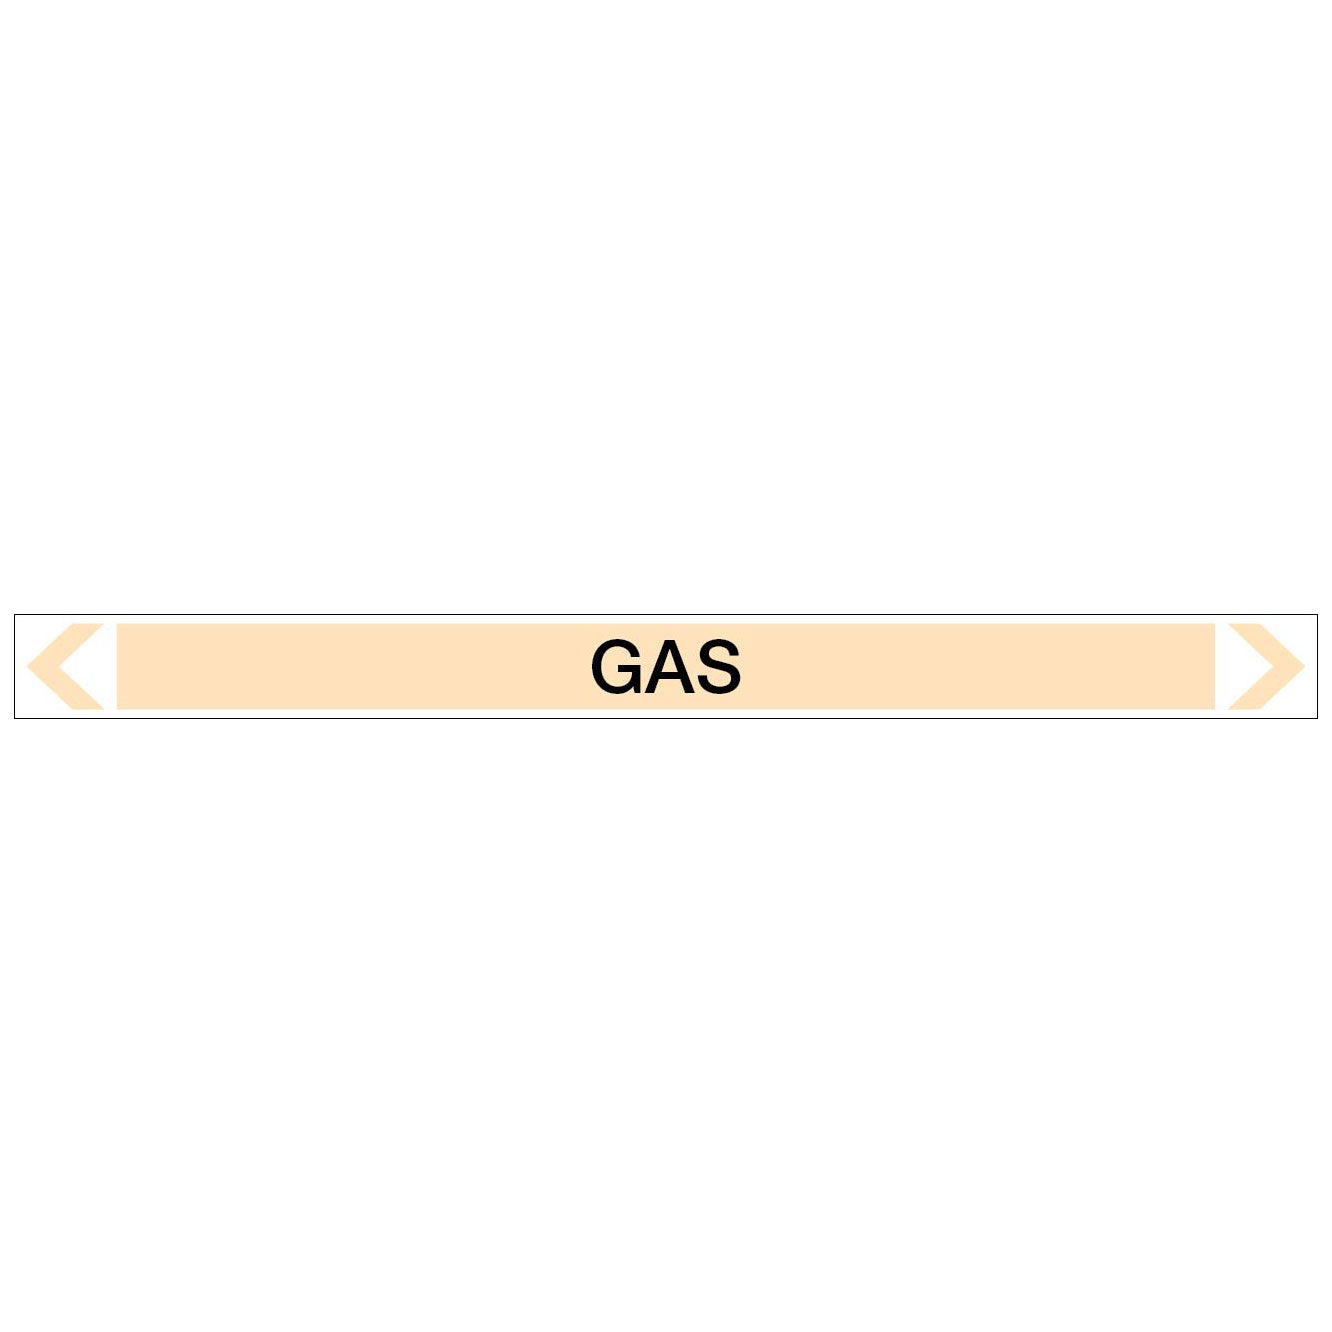 Gases - Gas - Pipe Marker Sticker